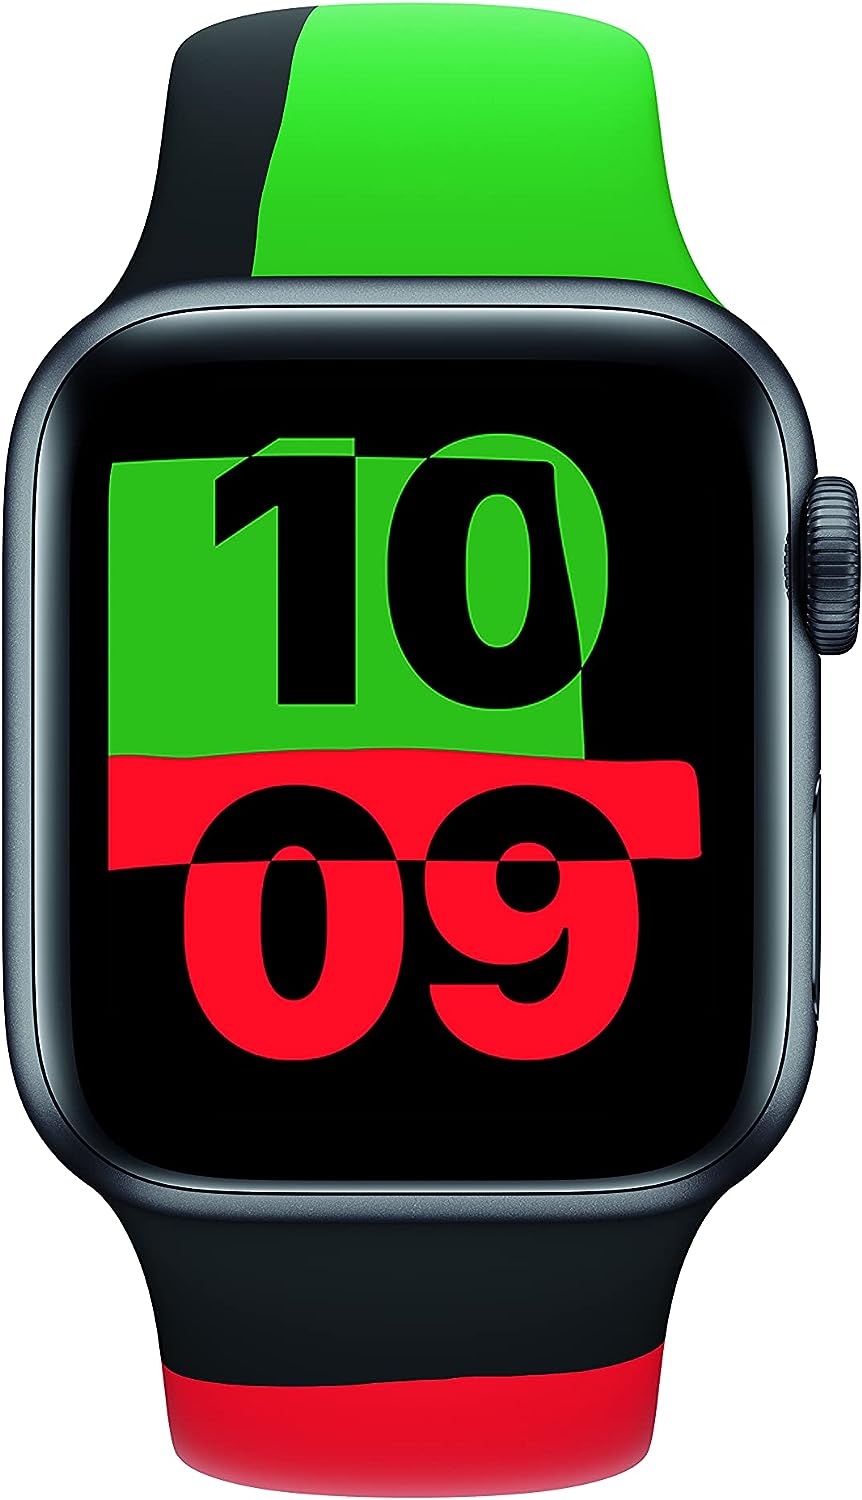 Apple سوار ساعة رياضي (44 ملم) - اسود يونيتي - عادي